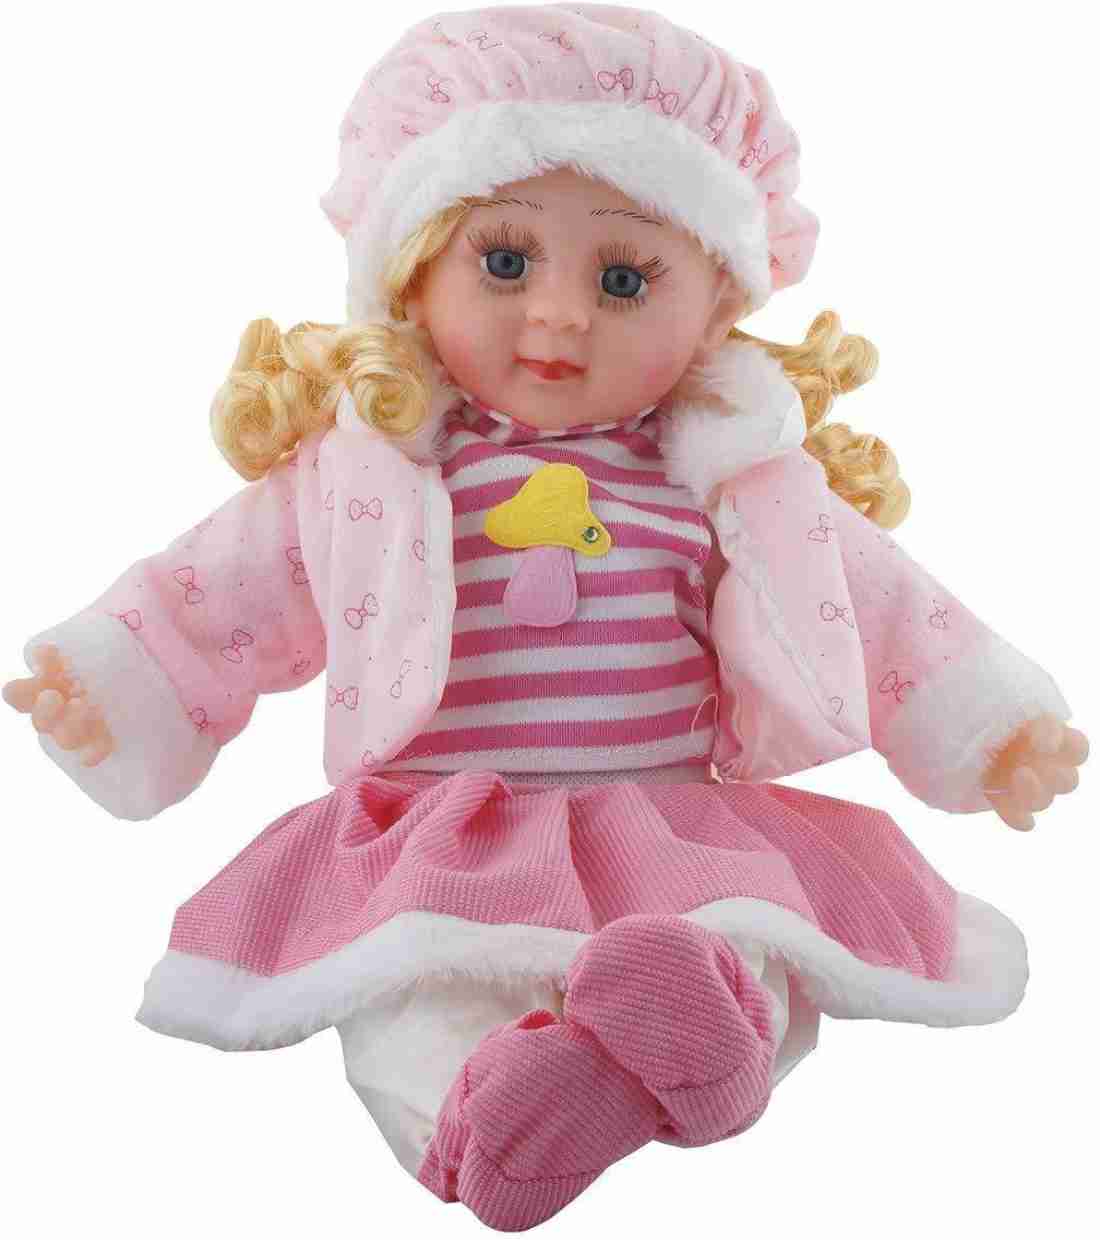 Modernshop Soft Girl Singing Song Baby Doll Toy(Pink) - Soft Girl ...